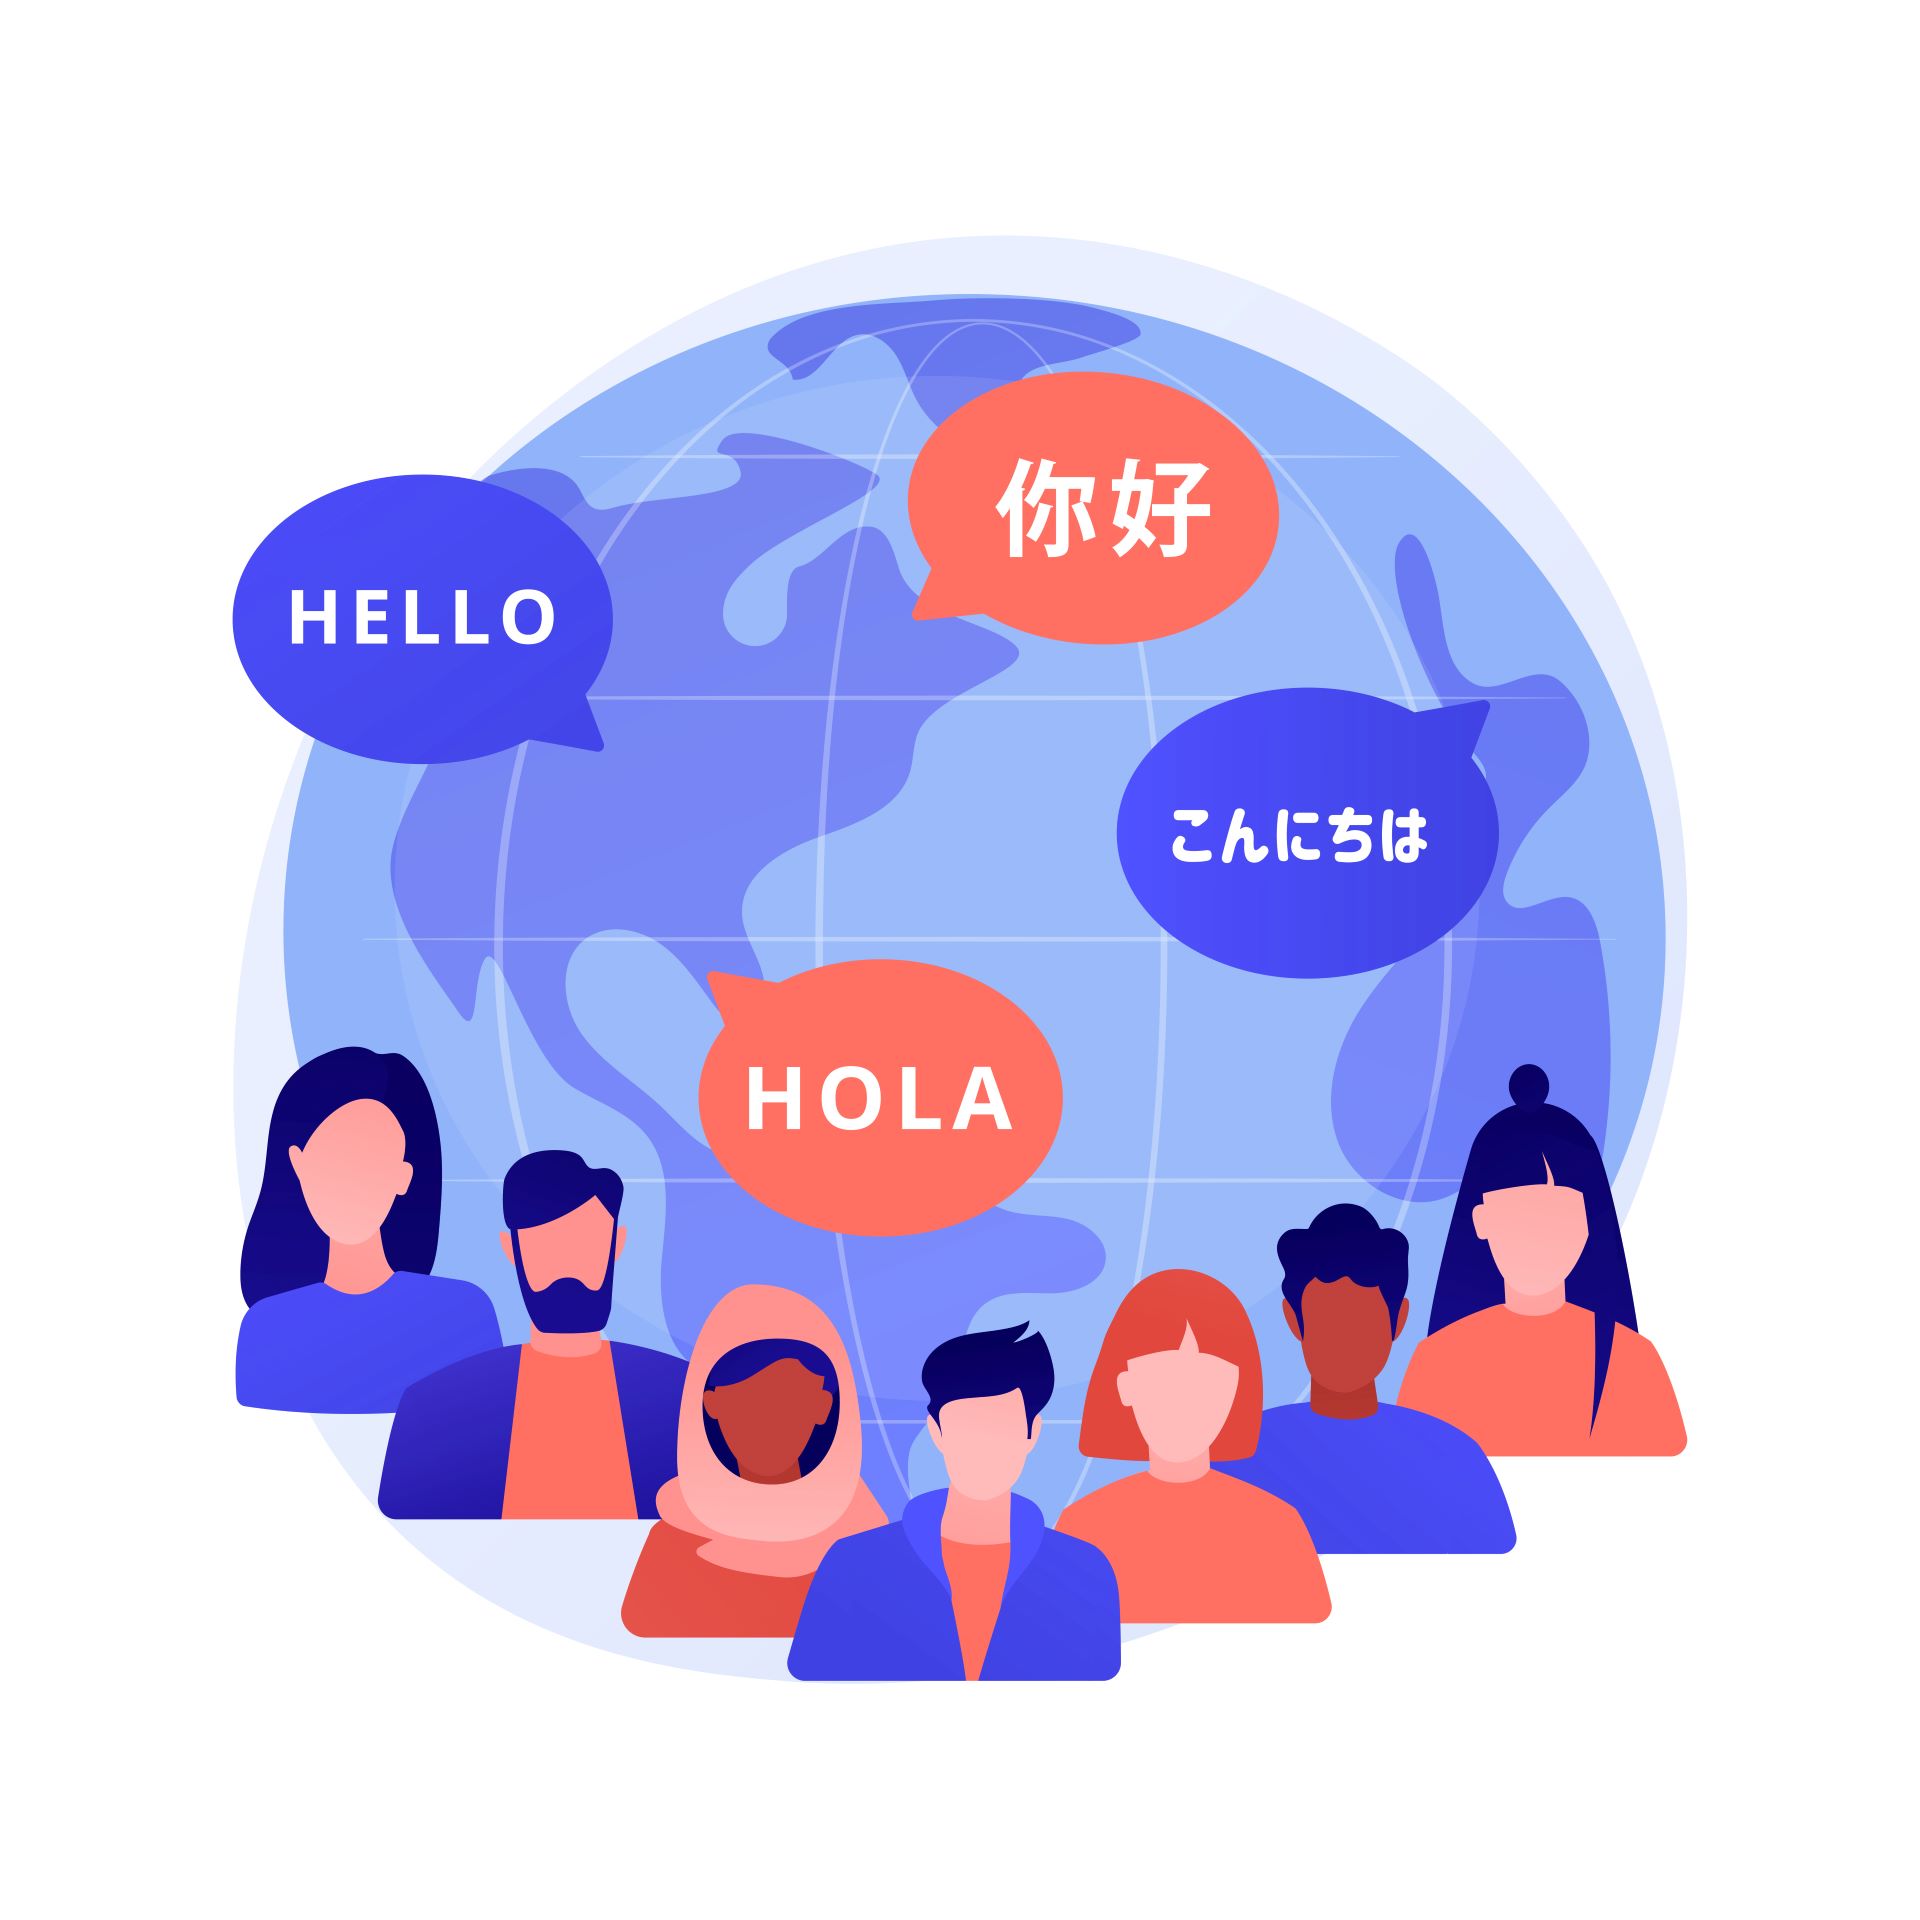 Breaking Language Barriers: Google Assistant’s Multilingual Interchangeability